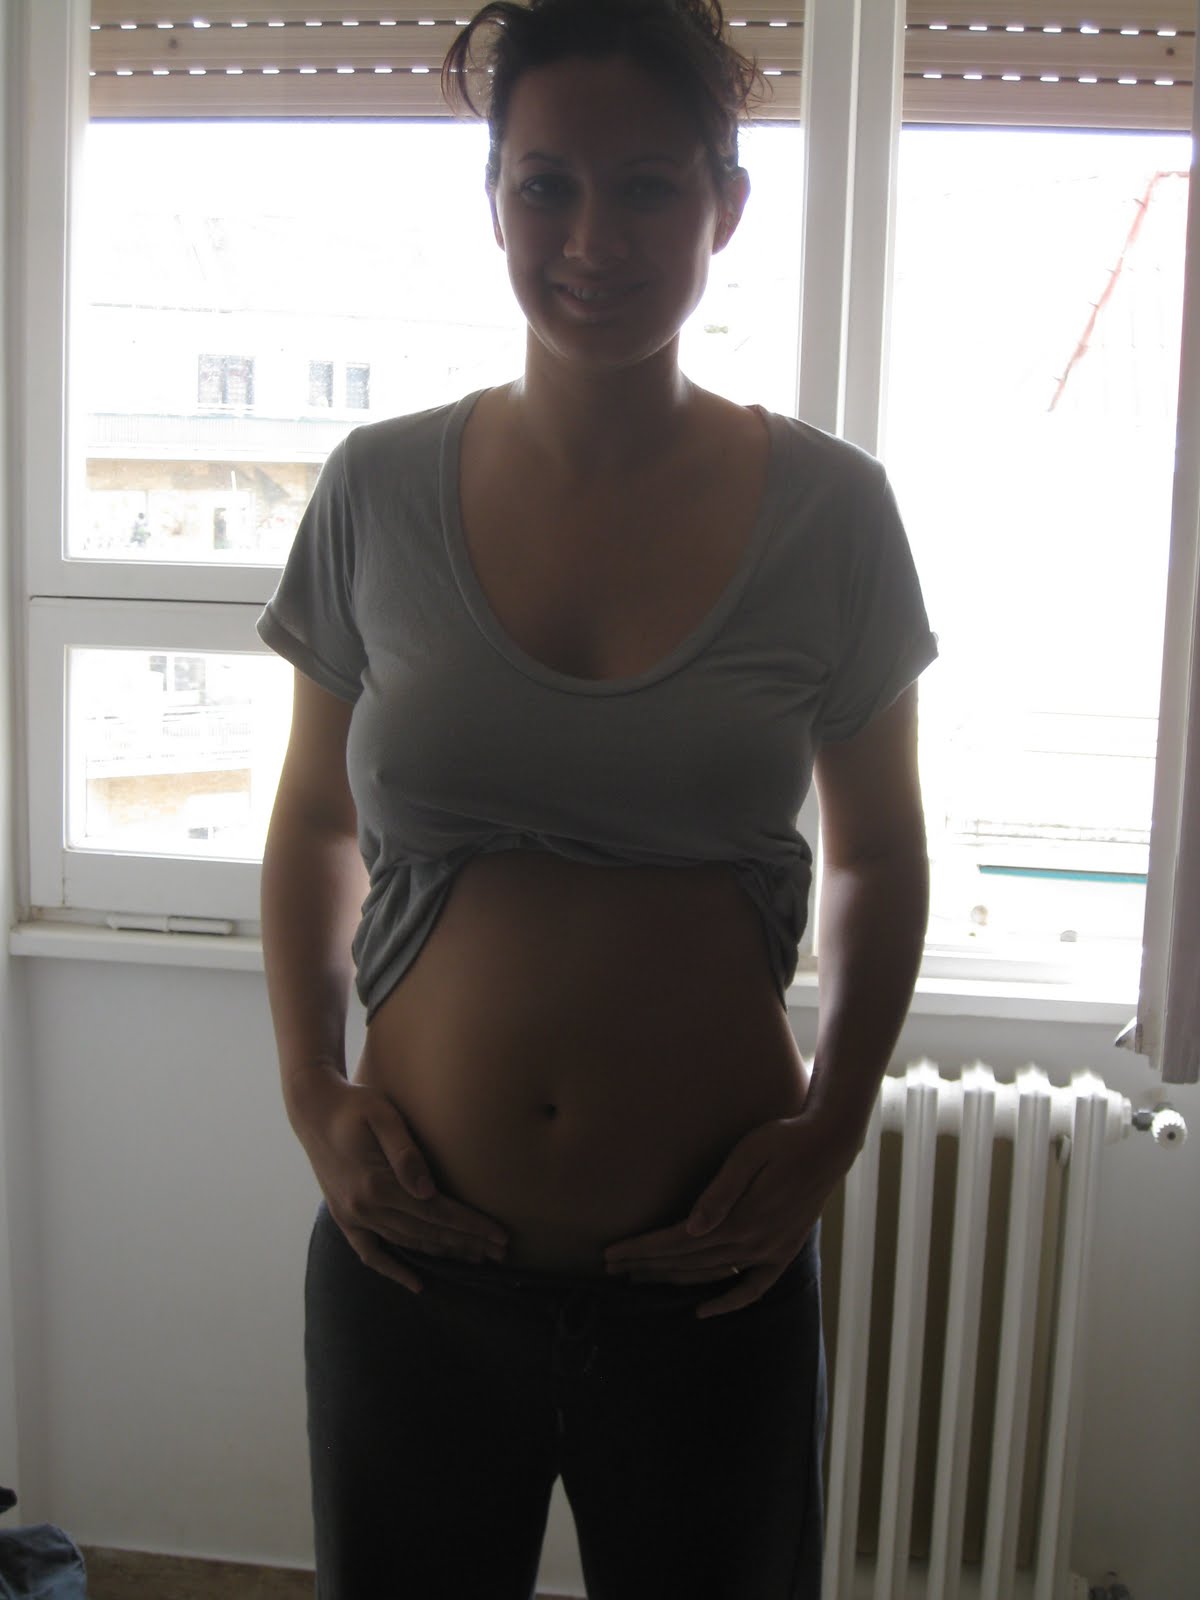 http://4.bp.blogspot.com/_kwAsjc-yrTs/S8Gig_9VdDI/AAAAAAAAACE/eF71JnaBROs/s1600/Dani+30+bday+and+first+pregnancy+pics+105.jpg